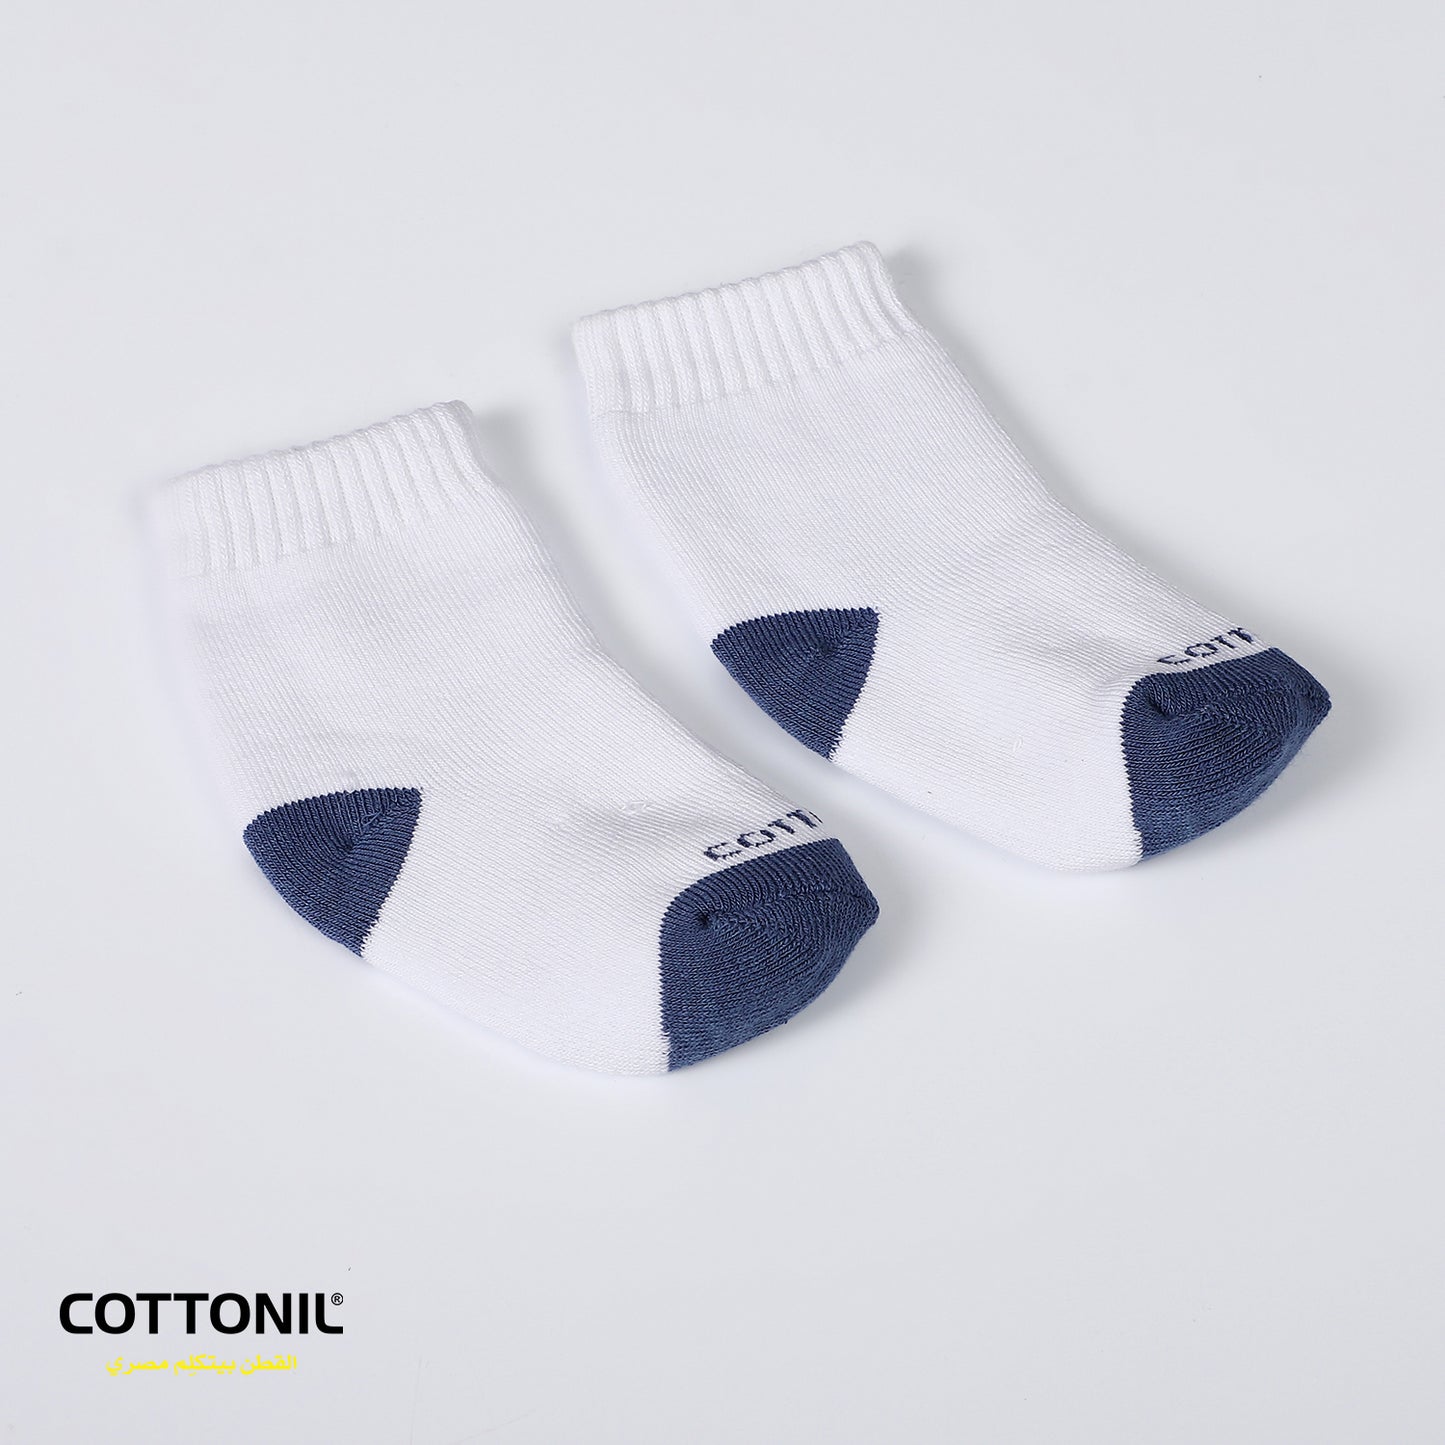 Bundle Of 6 Cotton Thick Boys Ankle Socksشراب اولاد فوطة كاملة